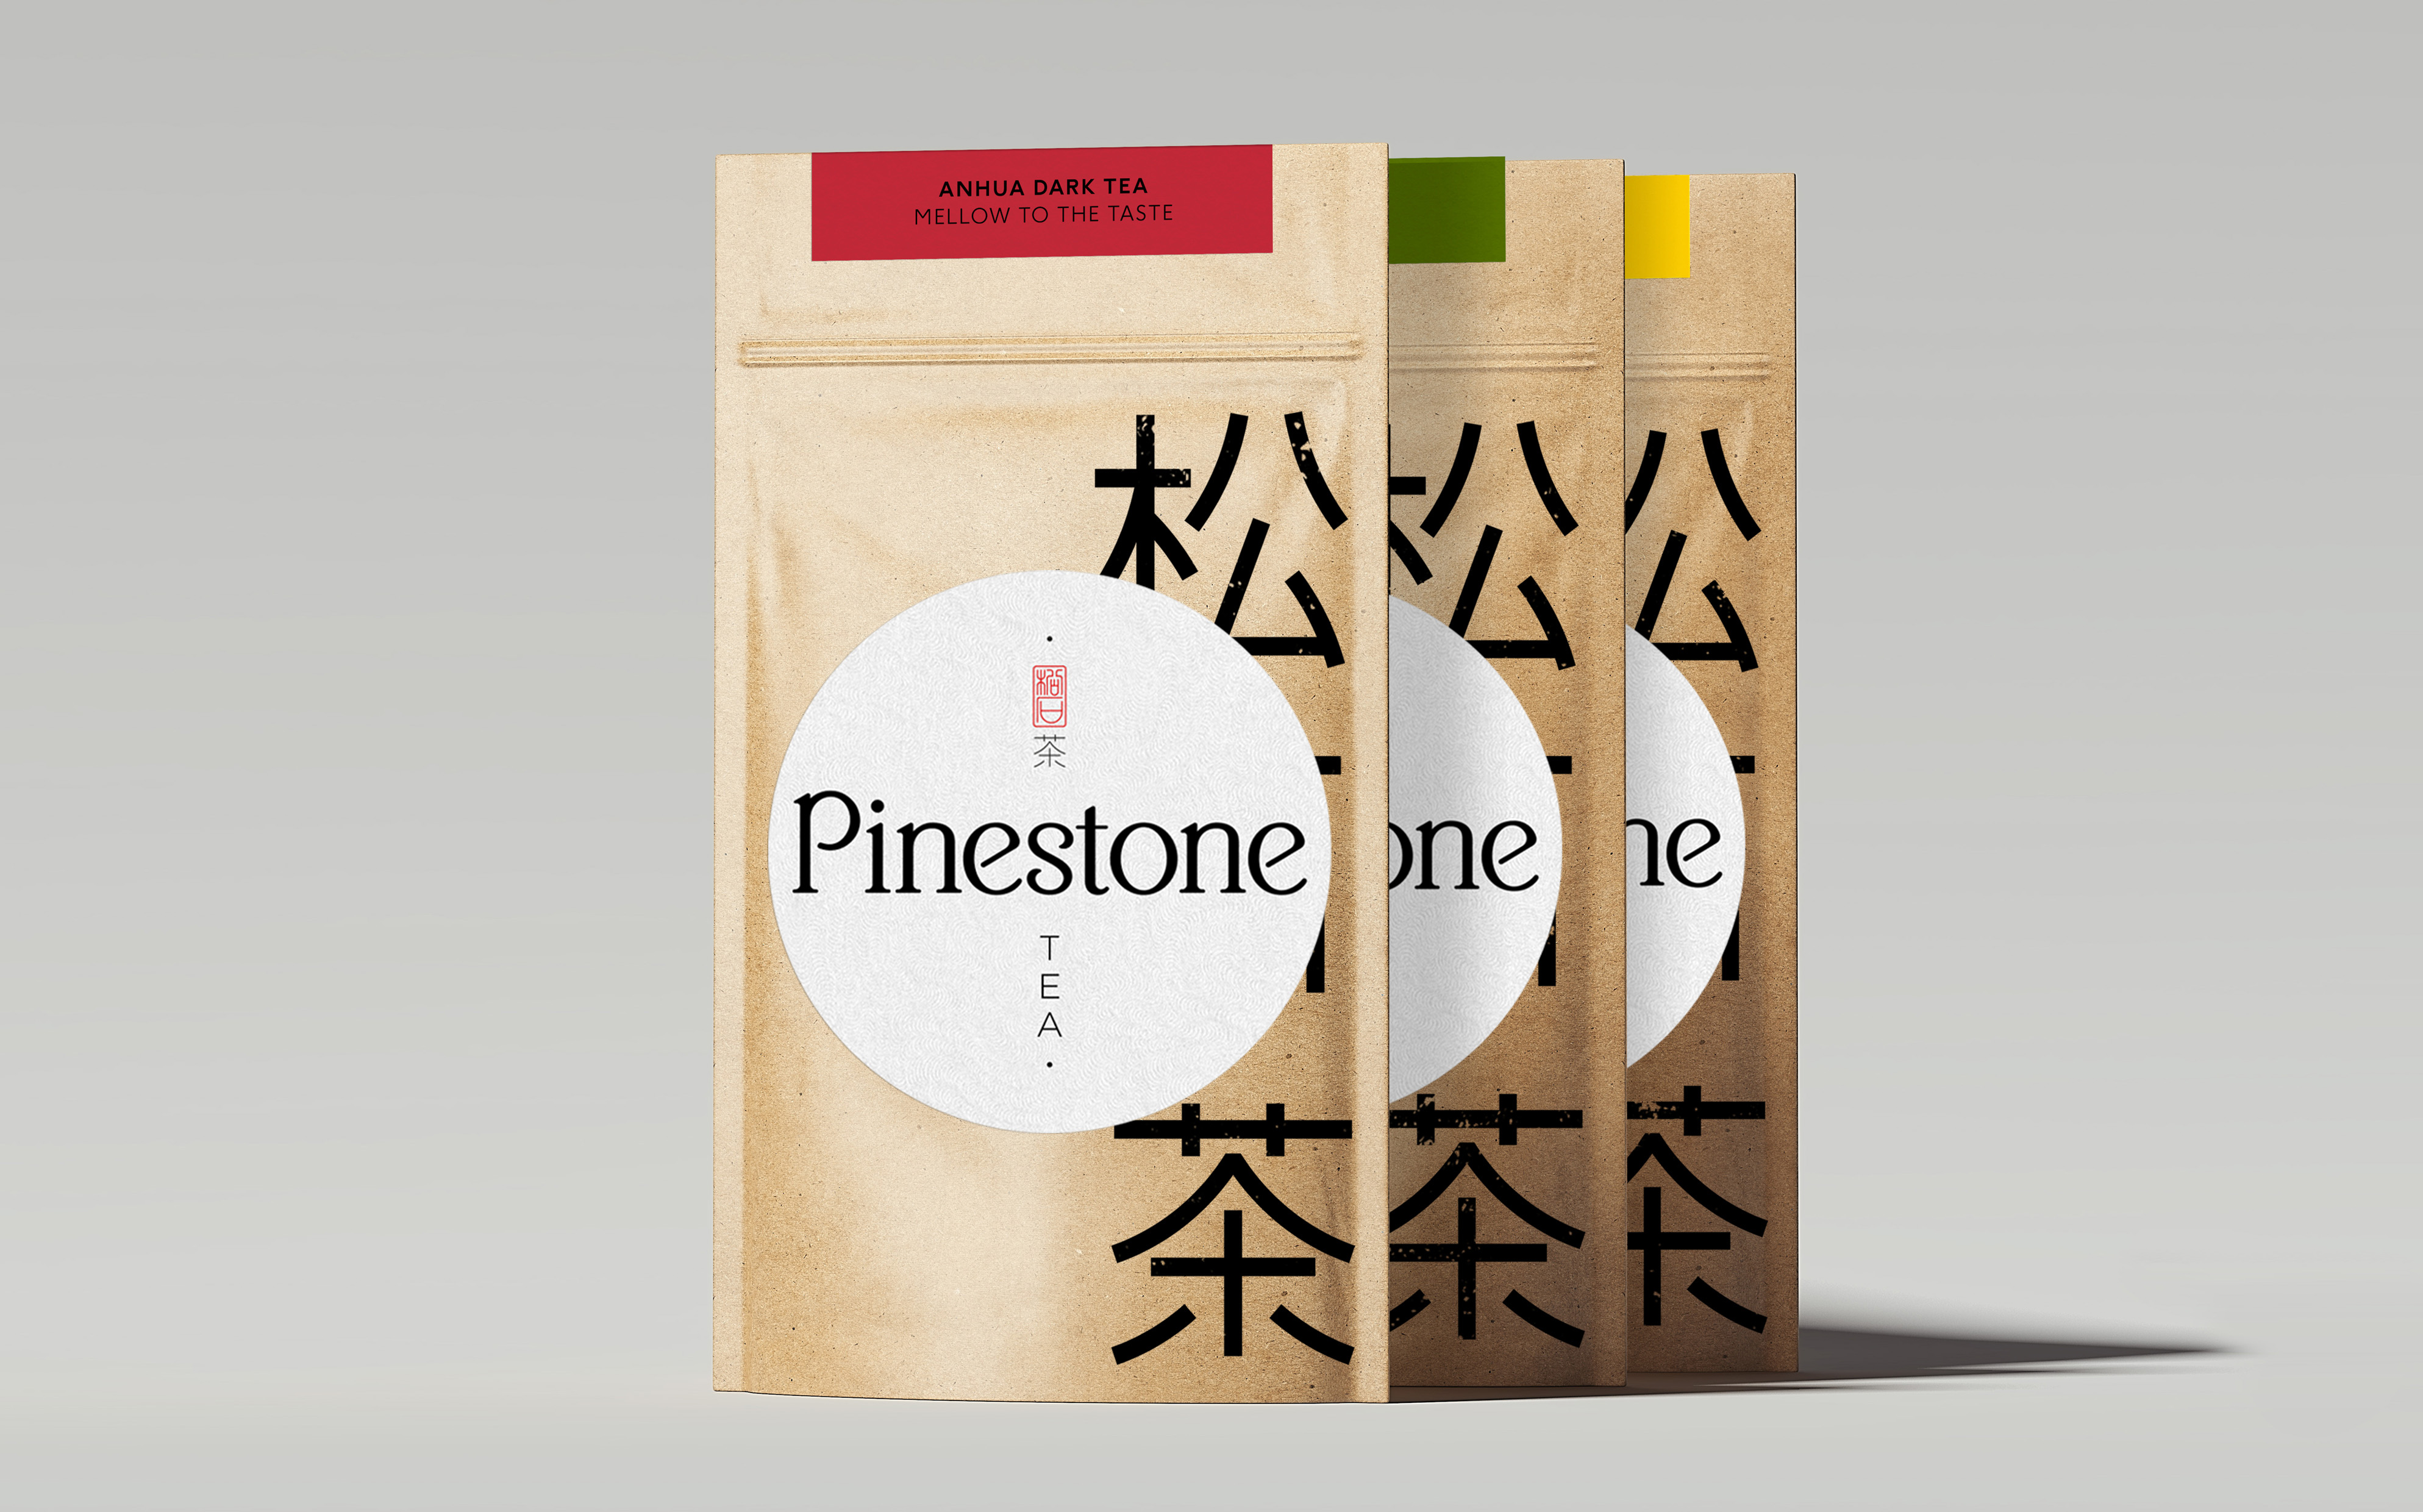 NotOnSunday Create New Identity and Packaging Design for Pinestone Tea